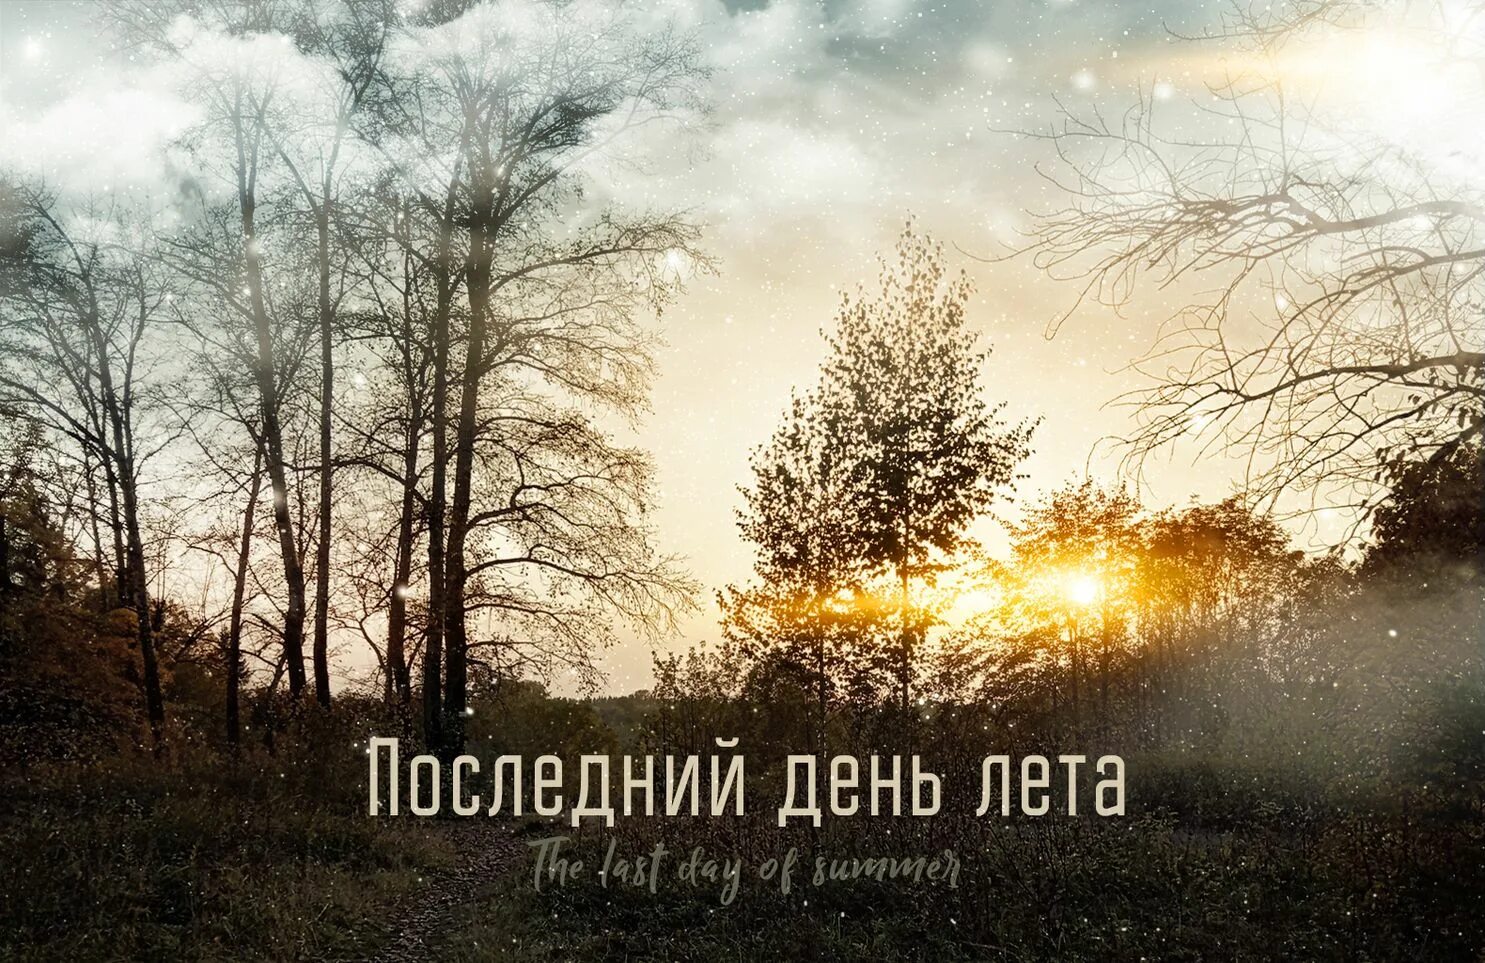 Последний день лета песня текст. Последний день лета. Песня последний день лета. Последний день лета стихи. С последним летним днем.